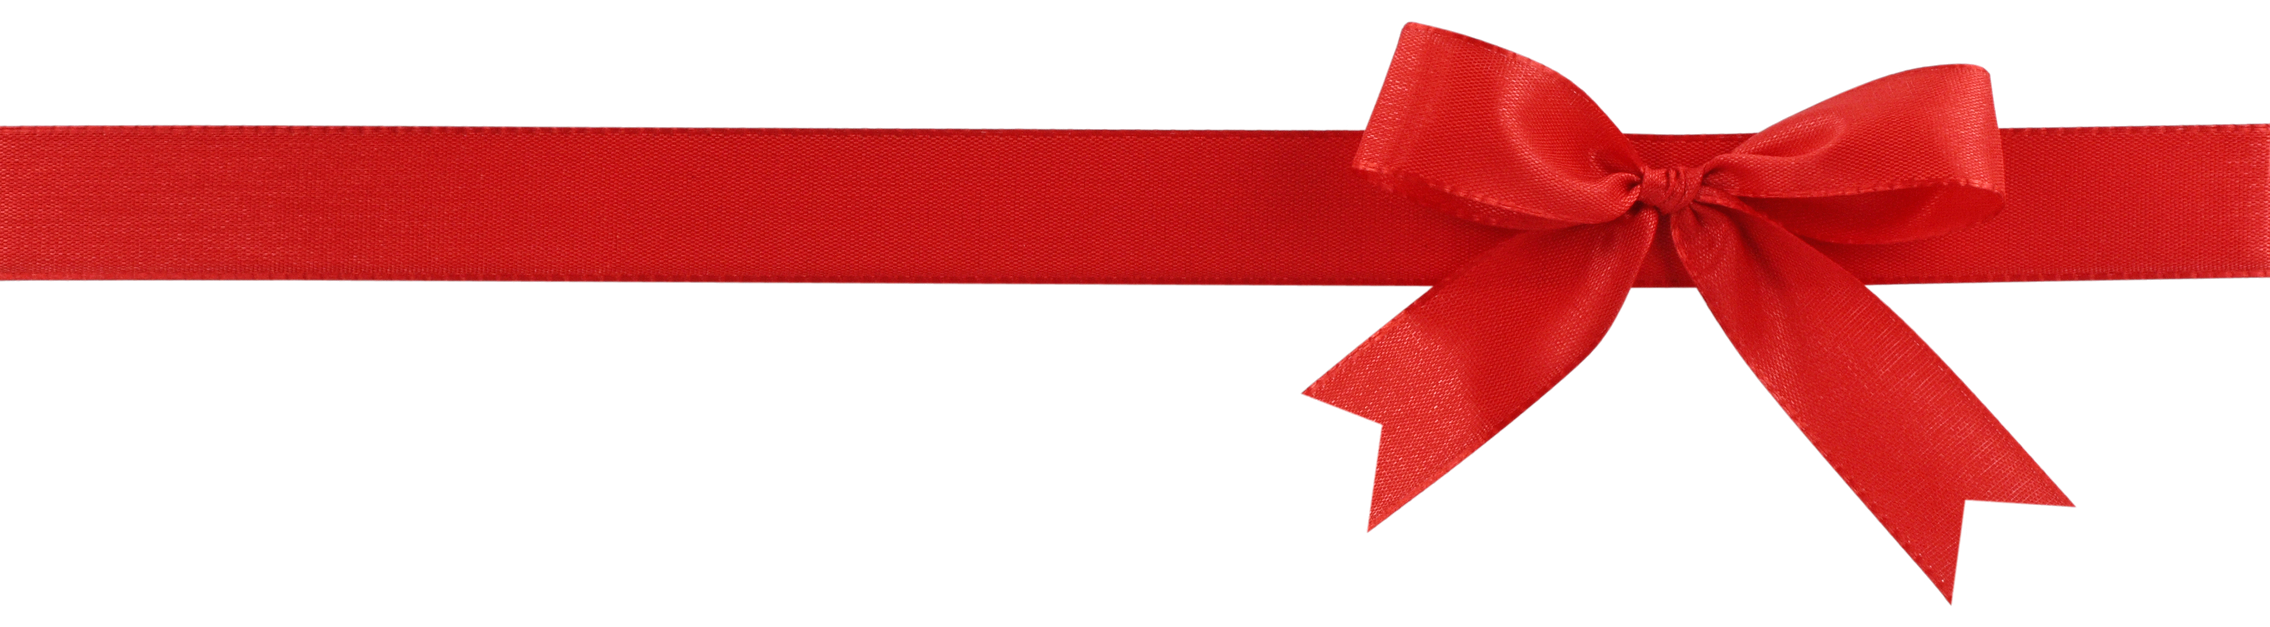 Busur merah PNG Clipart latar belakang